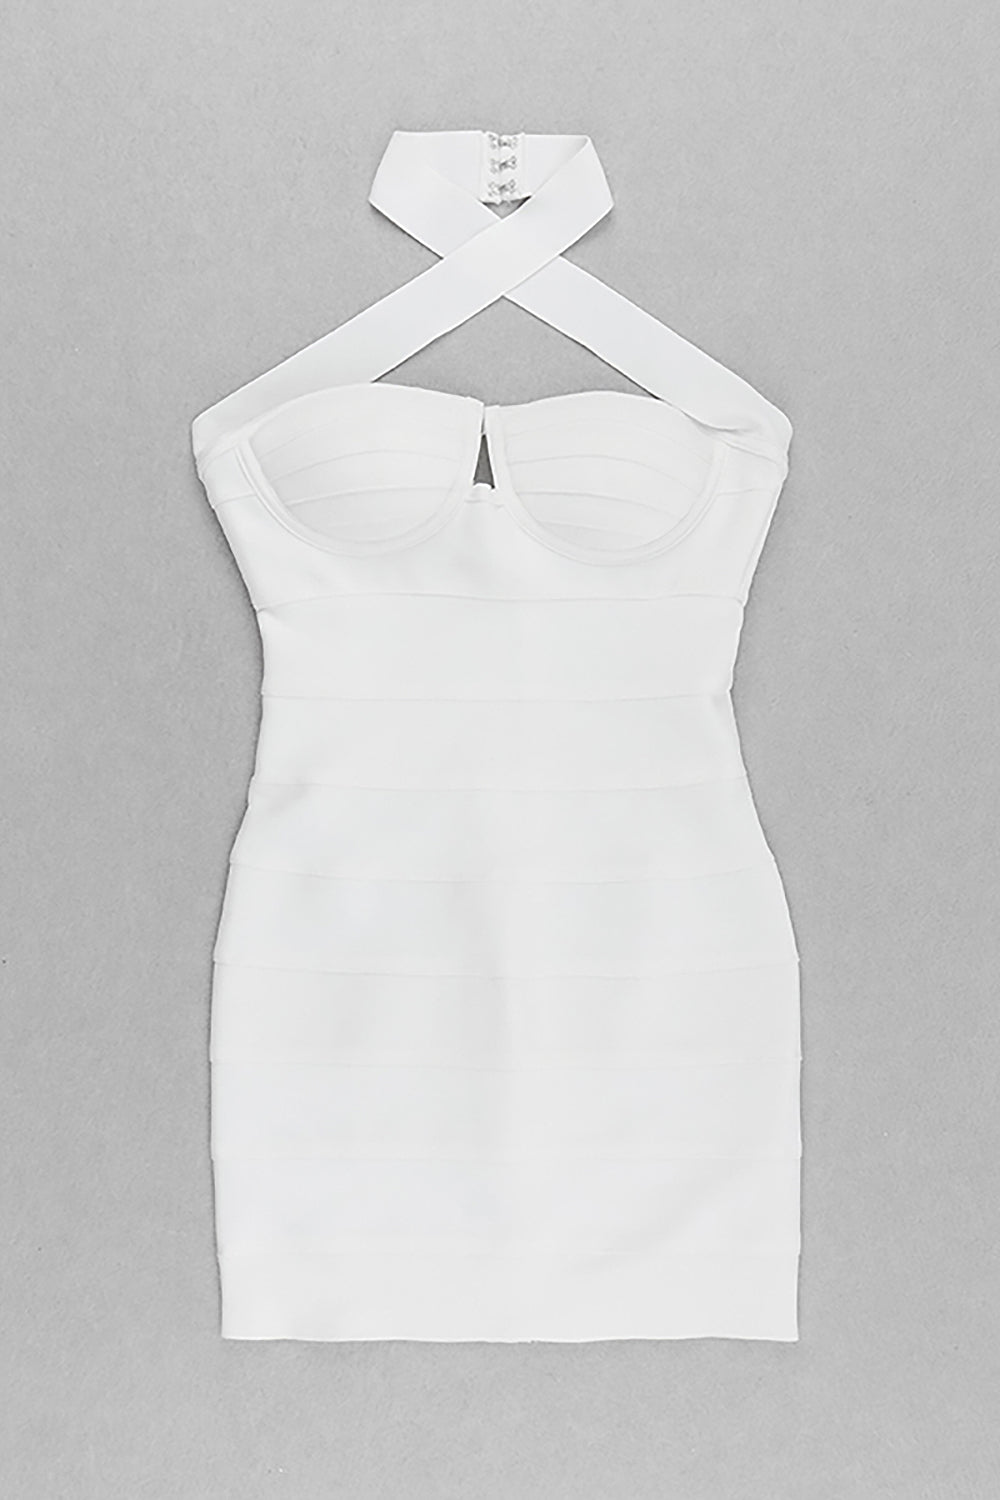 White/Black Halter Criss Cross Mini Bandage Dress - Chicida